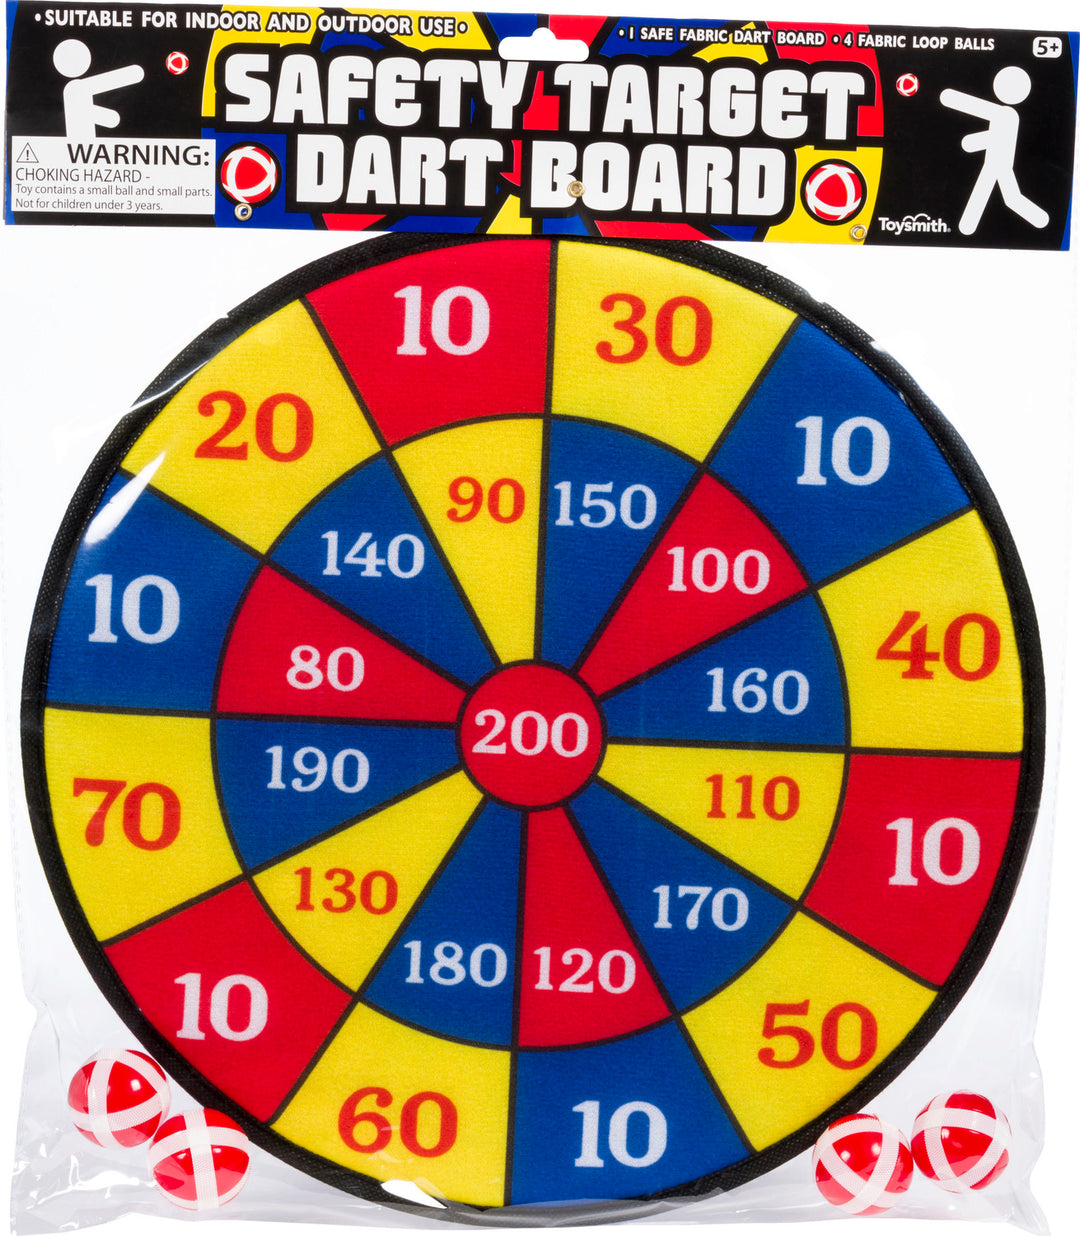 Safety Target Dart Board